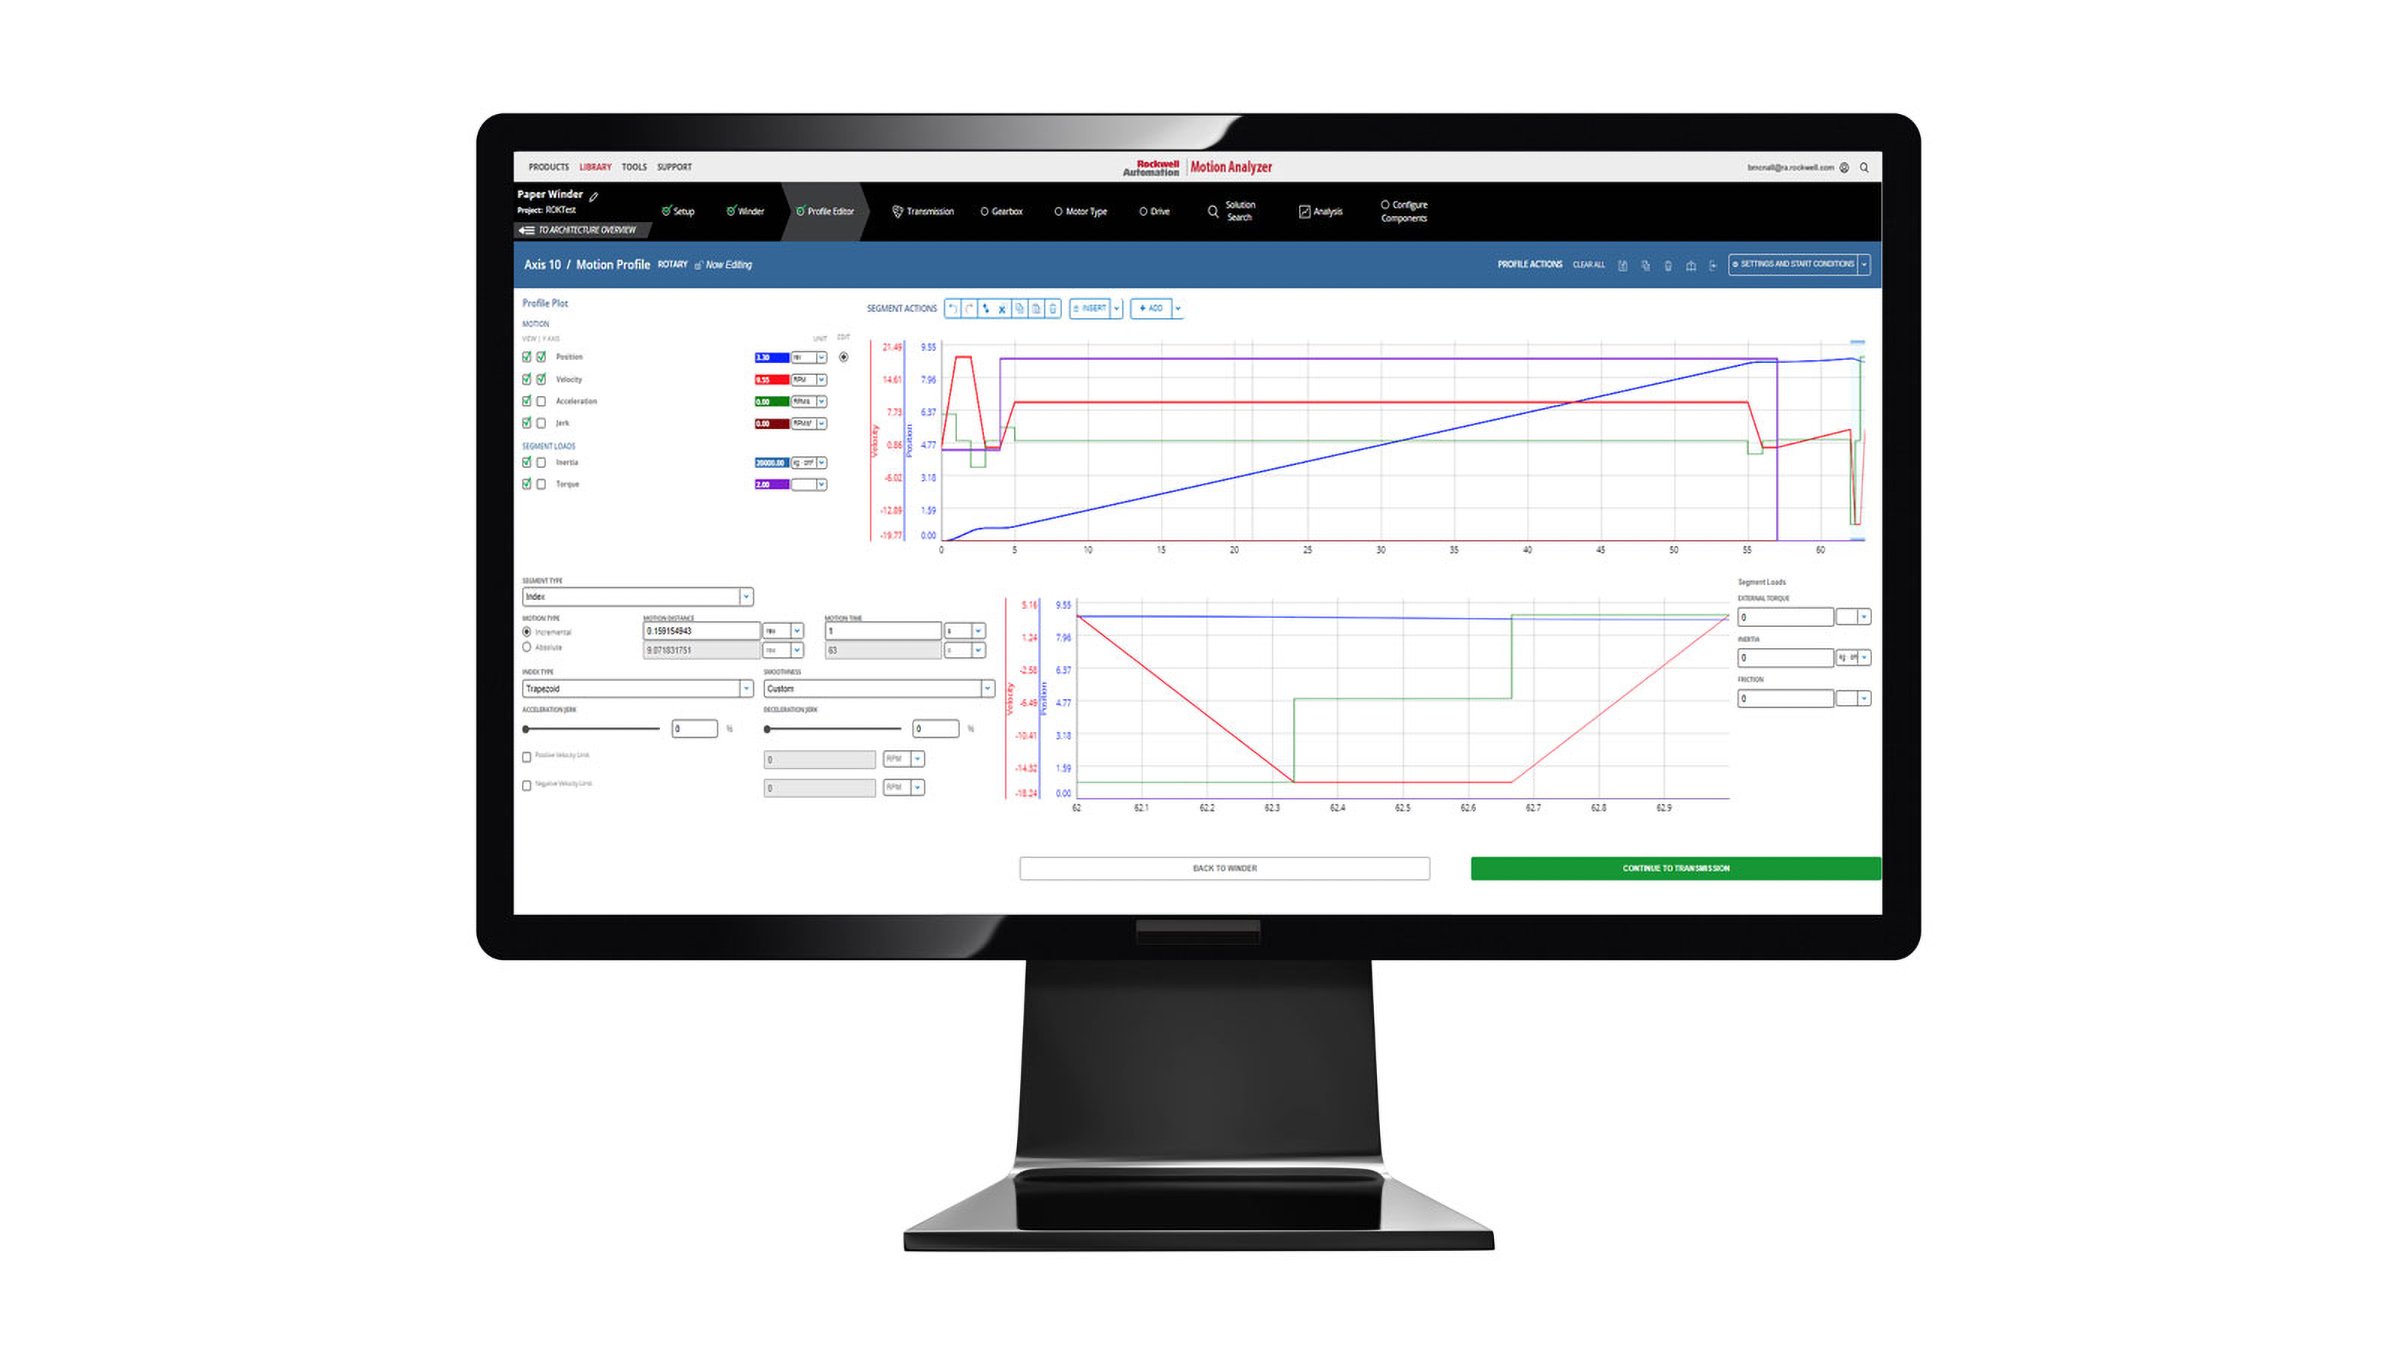 Motion Analyzer 소프트웨어는 모션 애플리케이션 종합 사이징 툴로 Kinetix® 모션 제어 시스템의 분석, 최적화, 선정 및 검사에 사용됩니다.